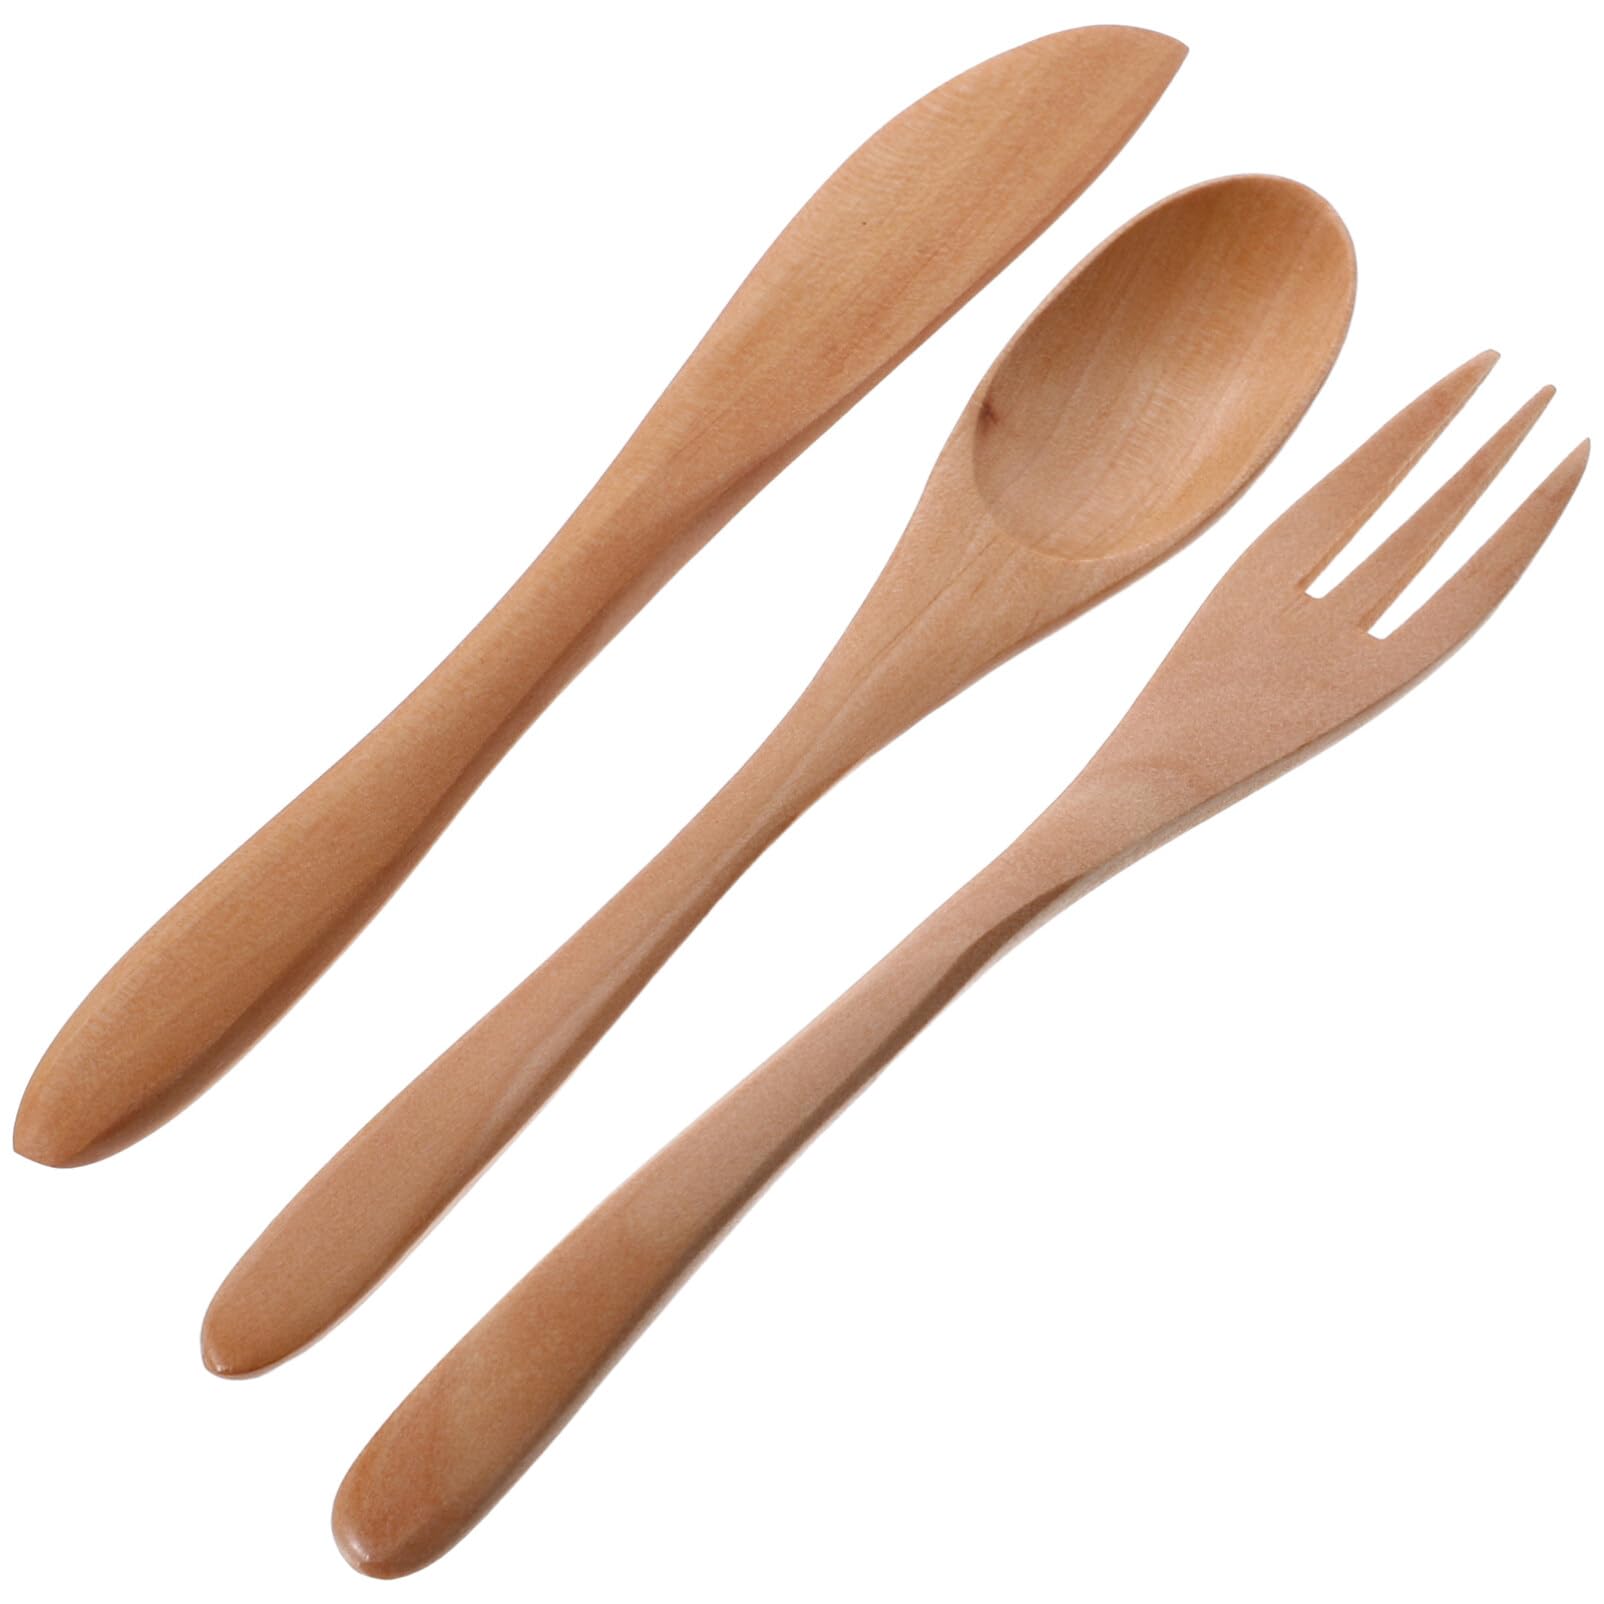 Kichvoe Wooden Cutlery Set Wood Kitchen Flatware Kids Tableware Reusable Dinnerware Spoon Fork Utensil for Home Preschool